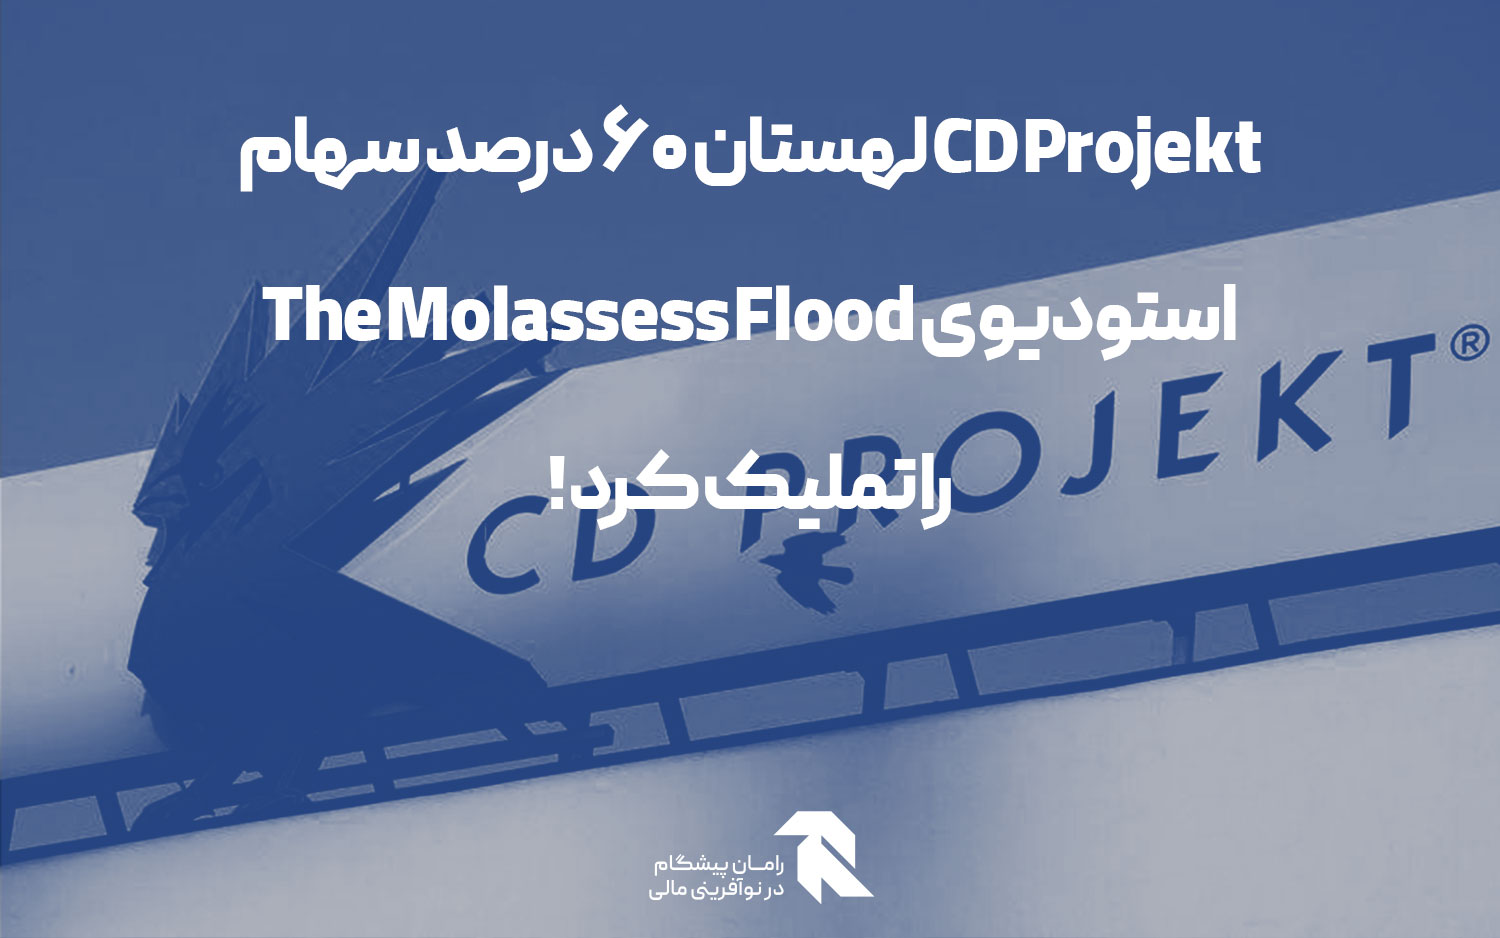 CD Projekt لهستان 60 درصد سهام استودیوی The Molassess Flood را تملیک کرد!